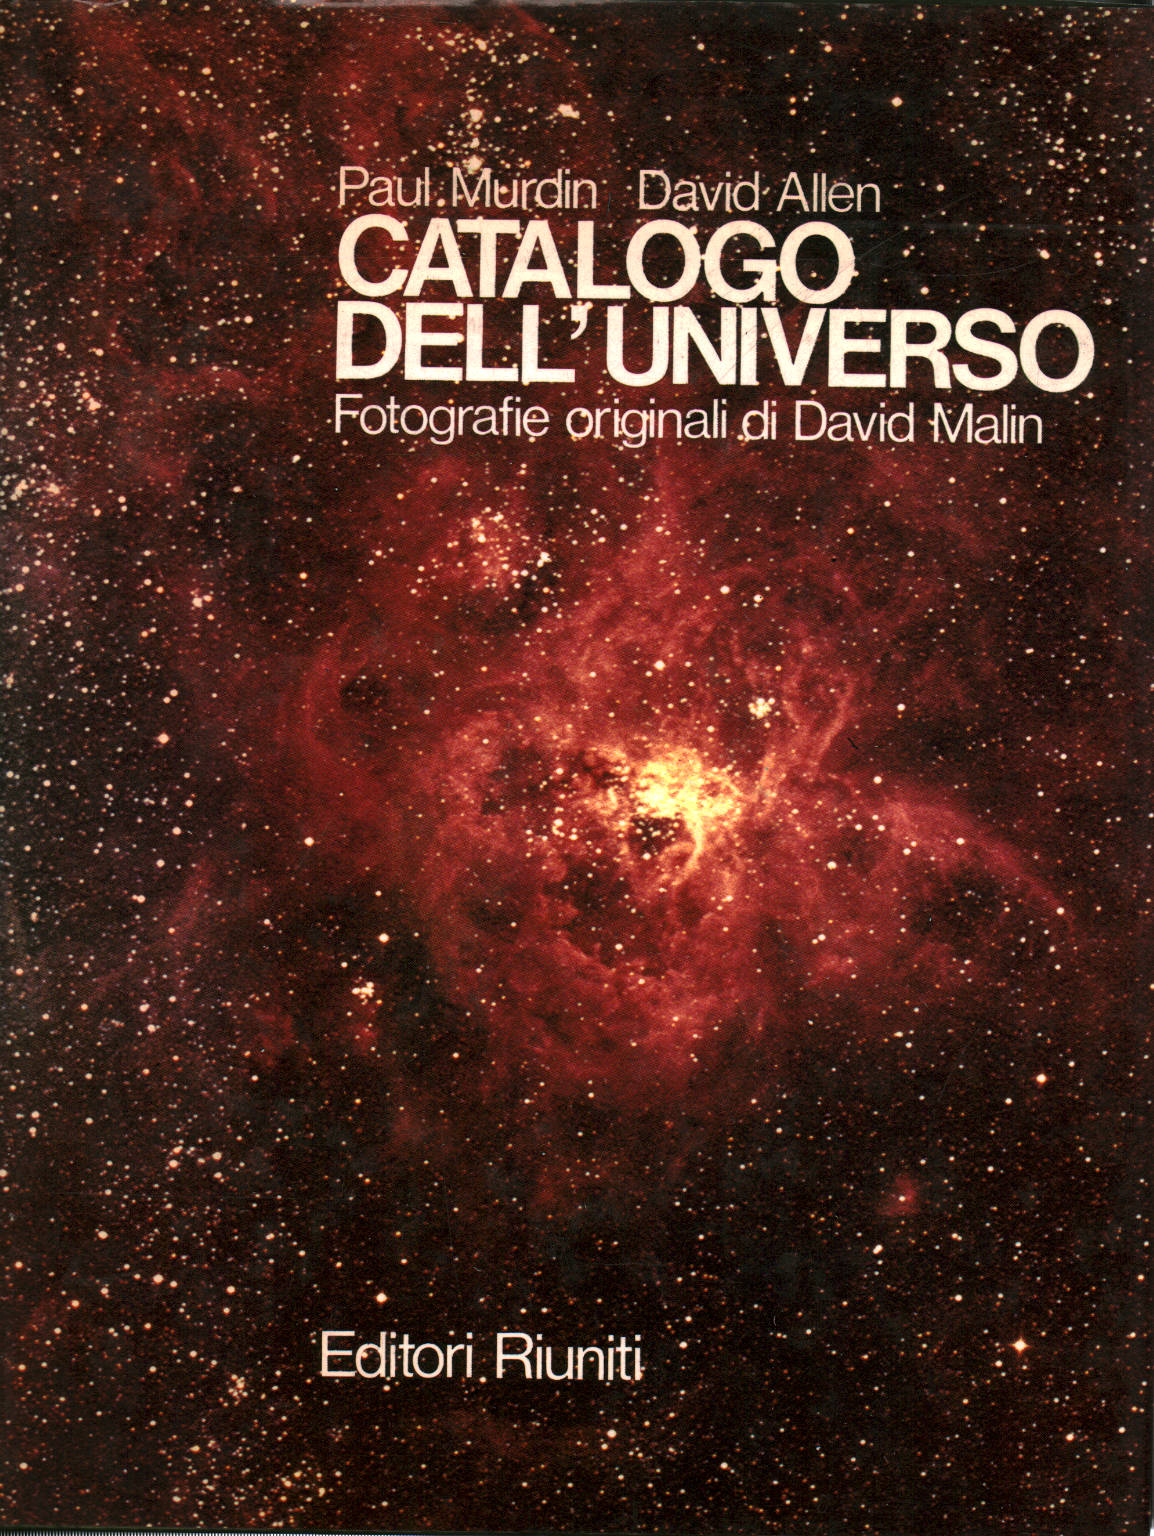 Catálogo de el Universo, s.una.